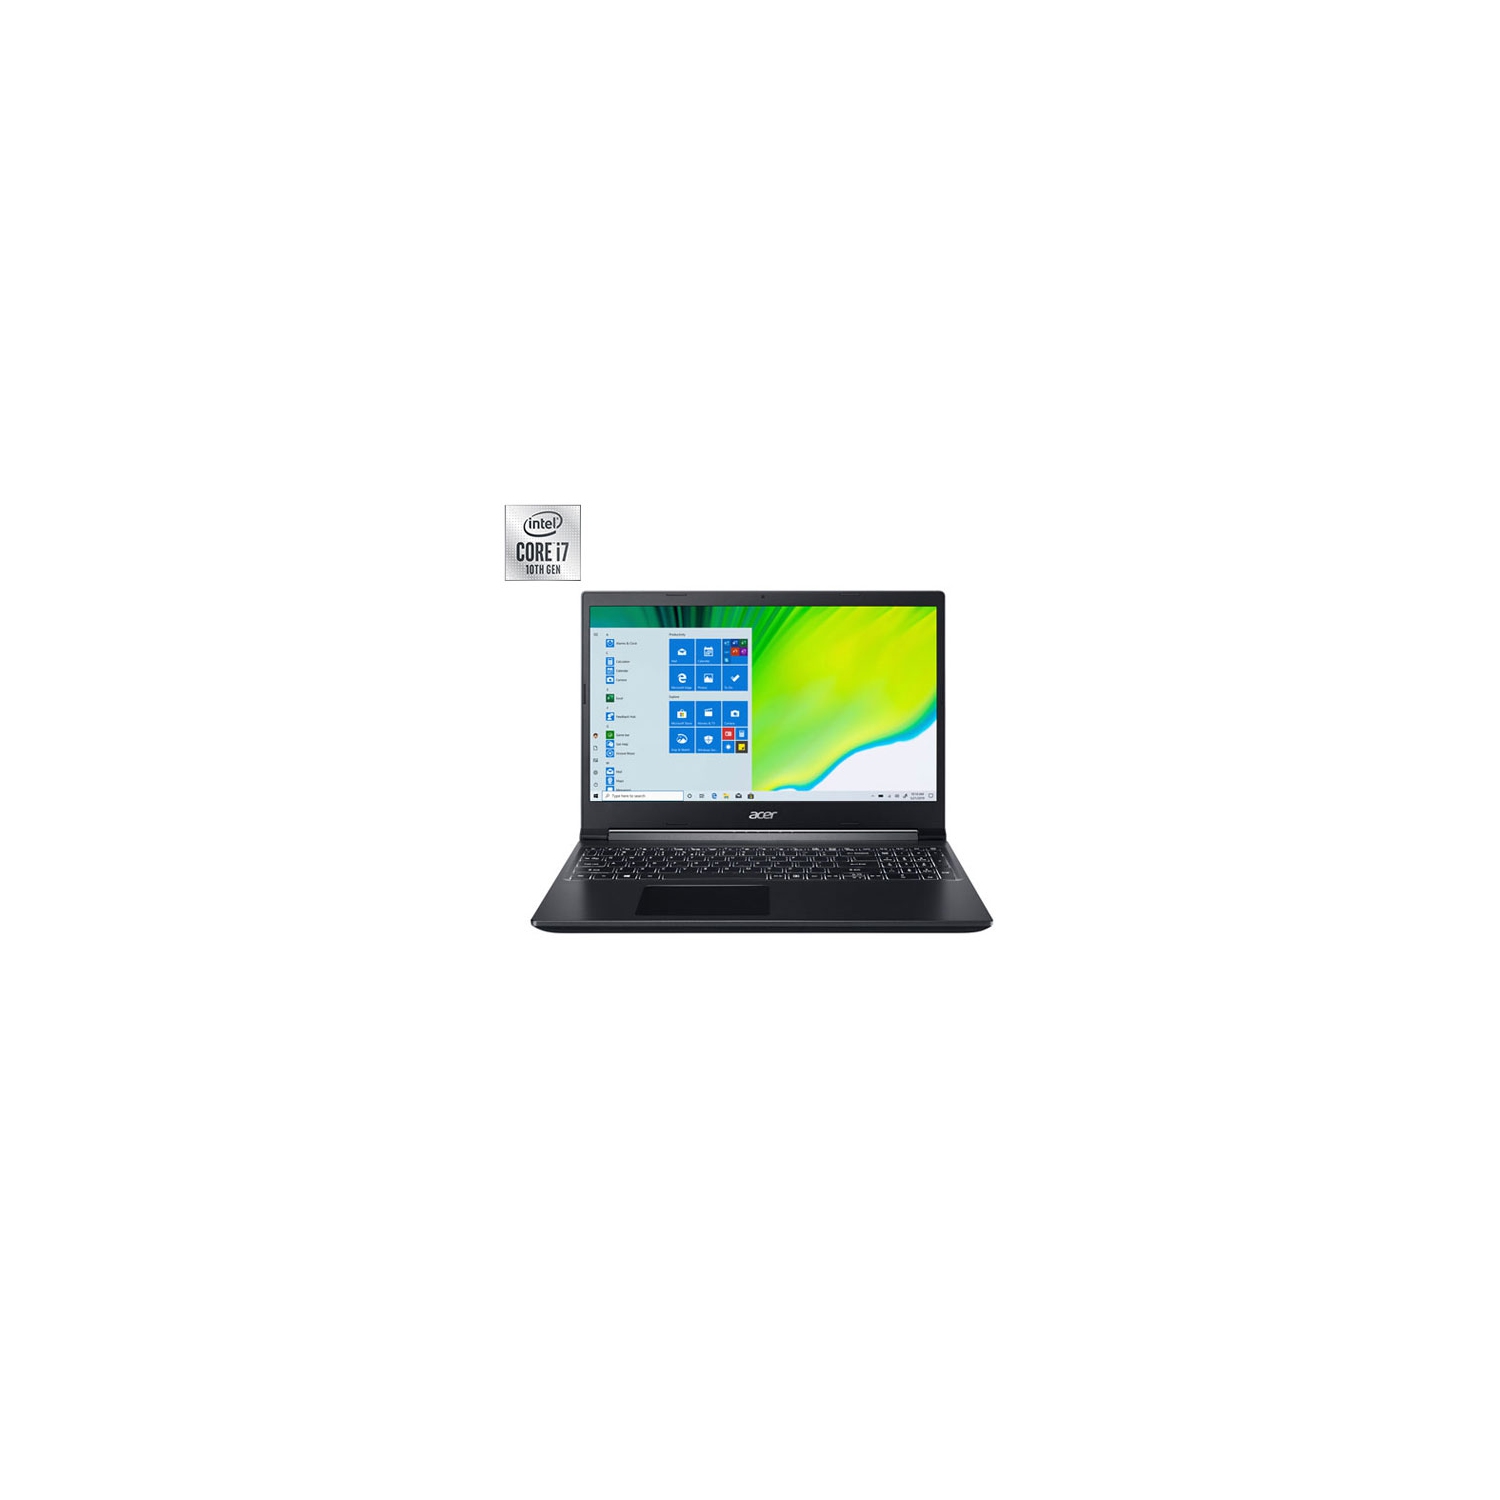 Refurbished (Fair) - Acer Aspire 7 15.6" Laptop - Black (Intel Core i7-10750H/512GB SSD/16GB RAM/GTX 1650/Windows 11)